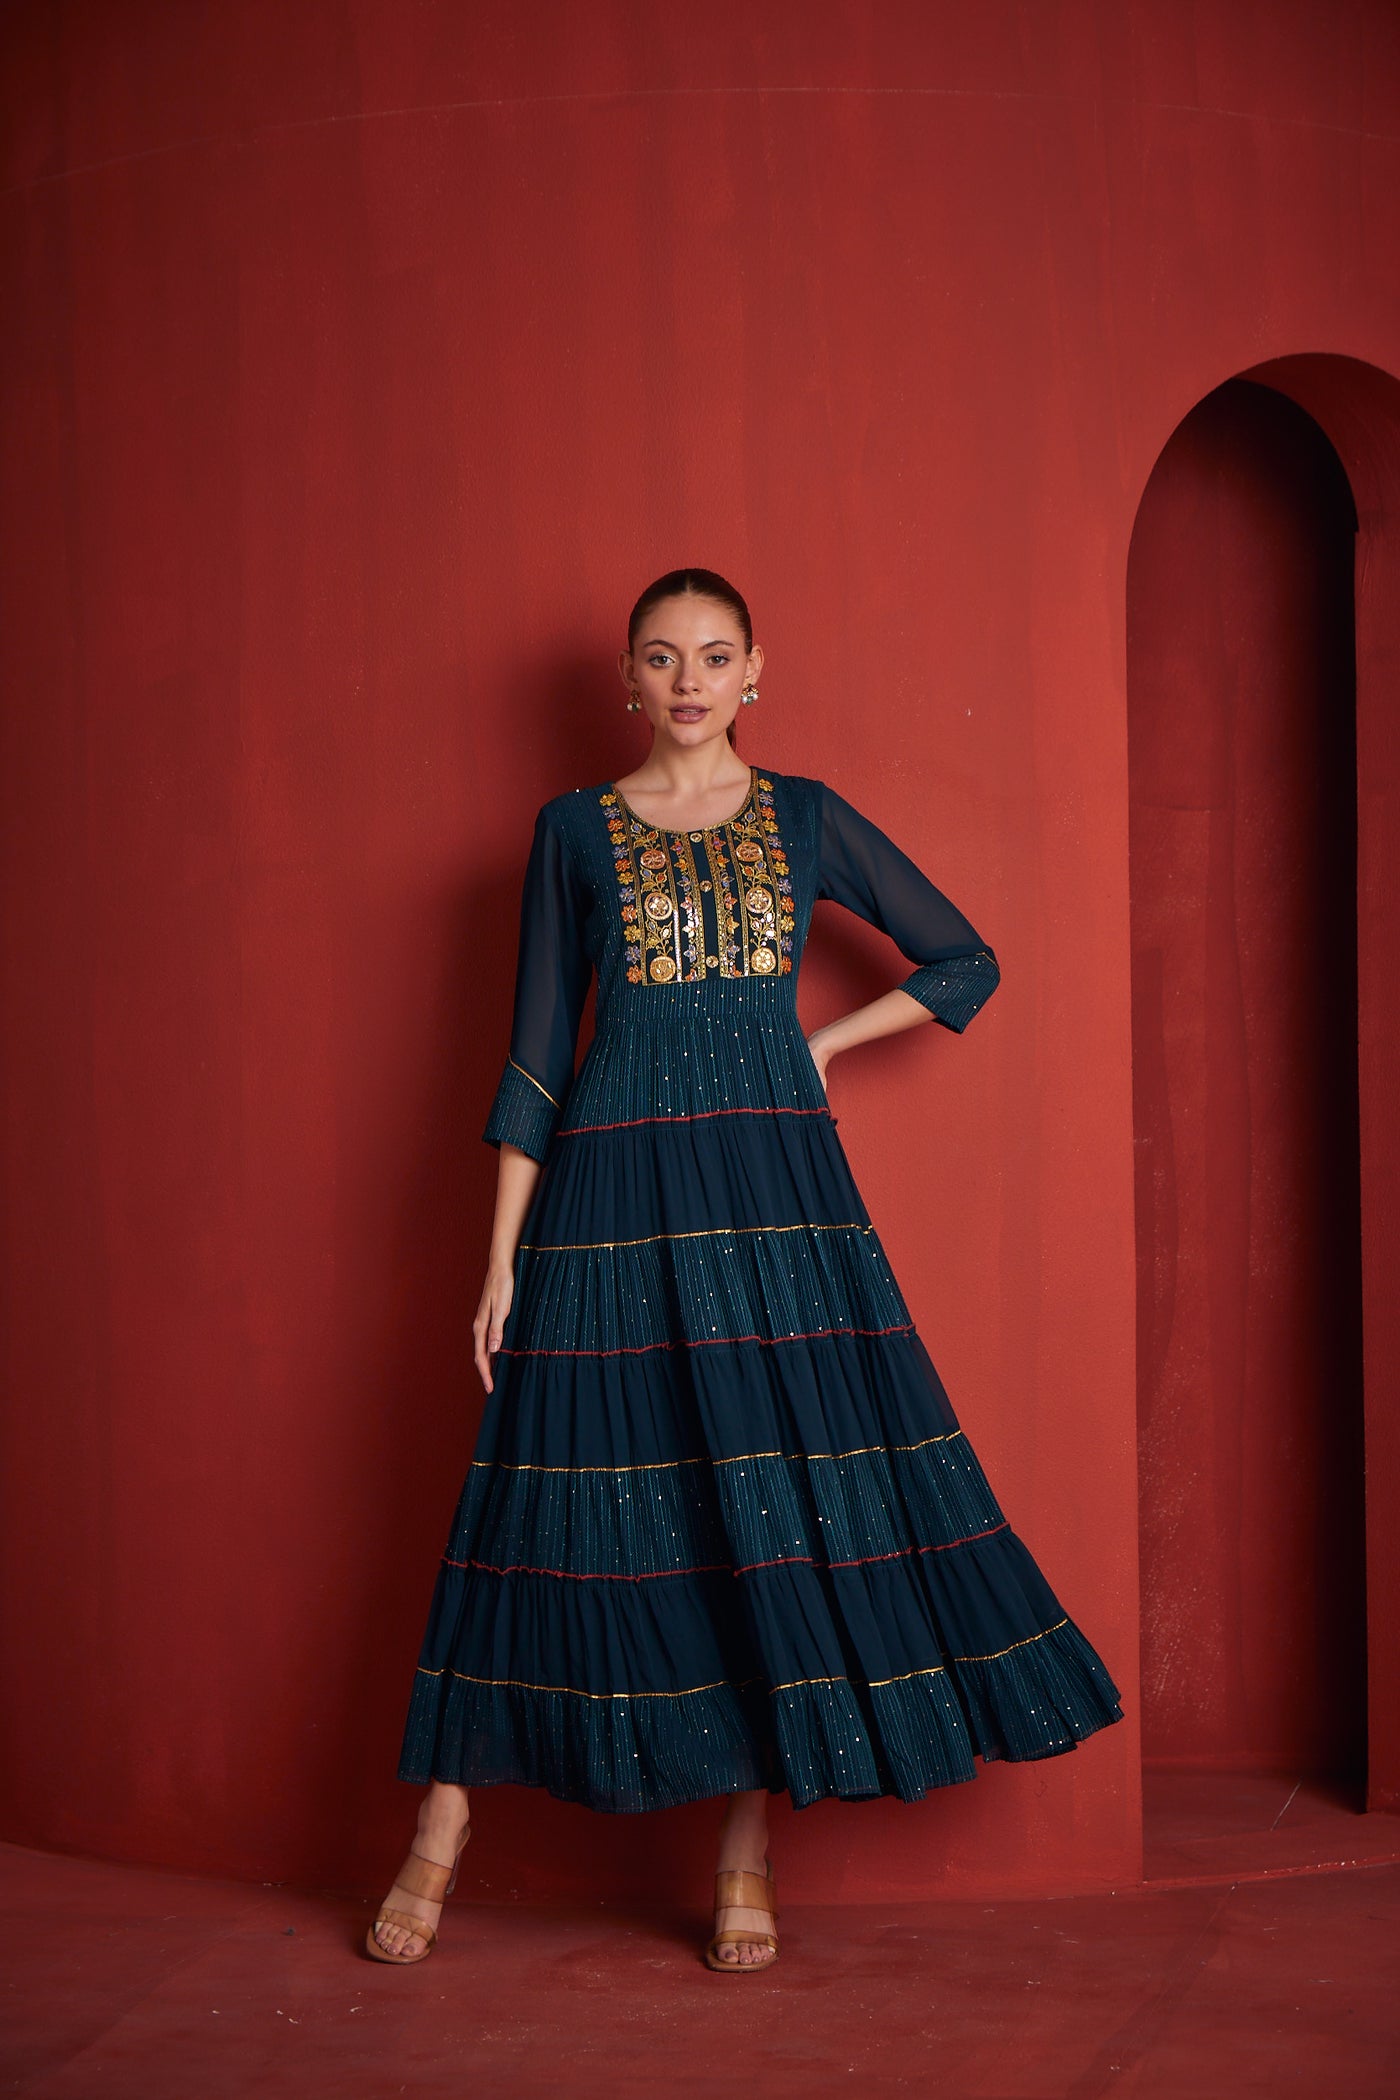 Georgette Designer Ladies Frock, Size: Medium at Rs 350/piece in New Delhi  | ID: 24725737830